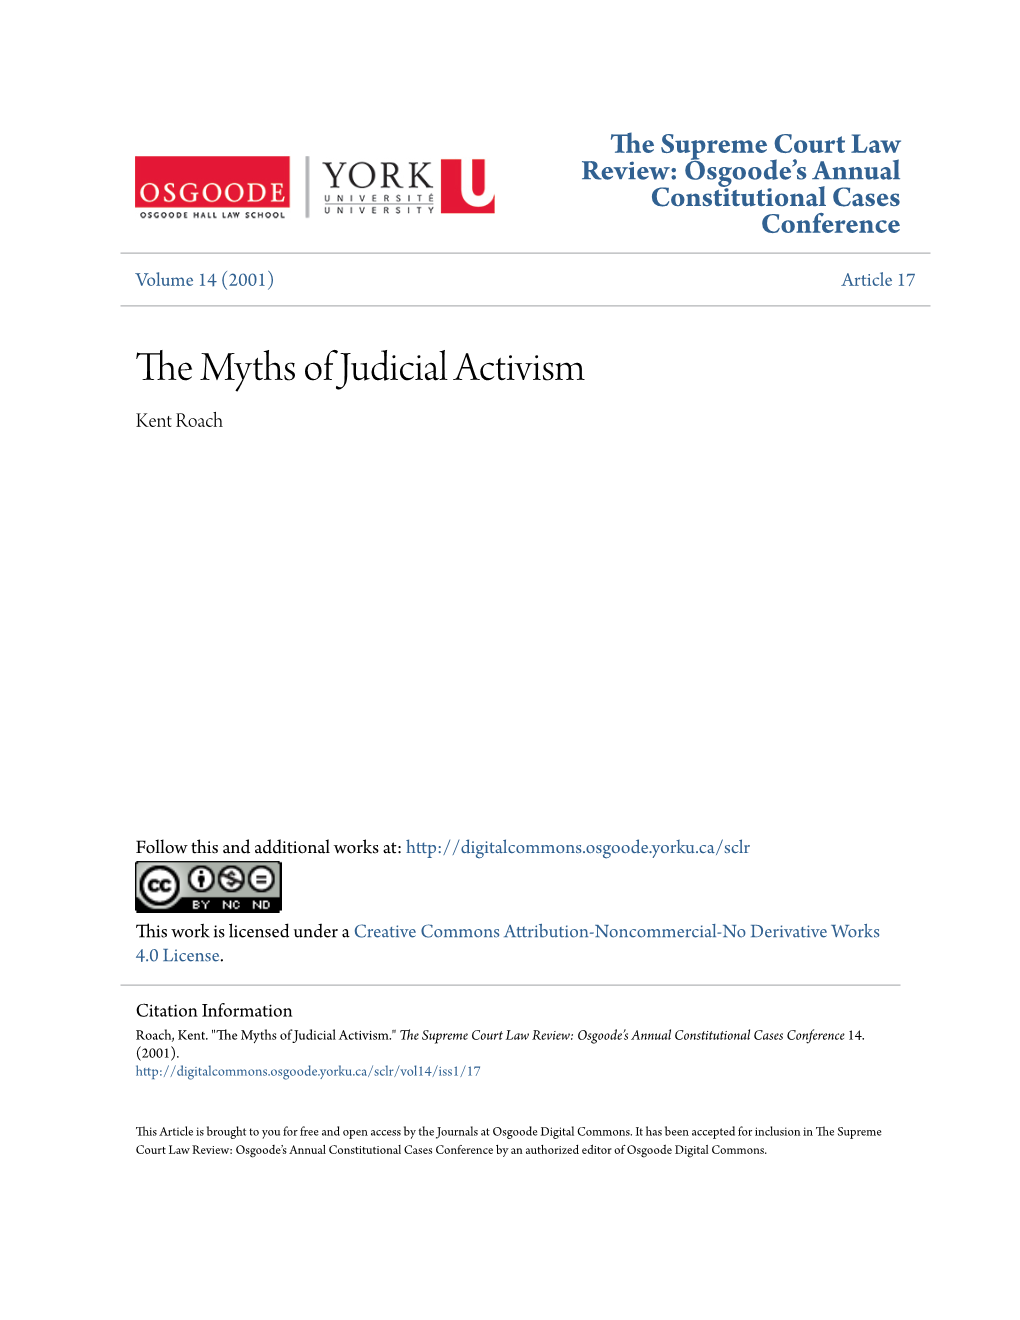 The Myths of Judicial Activism